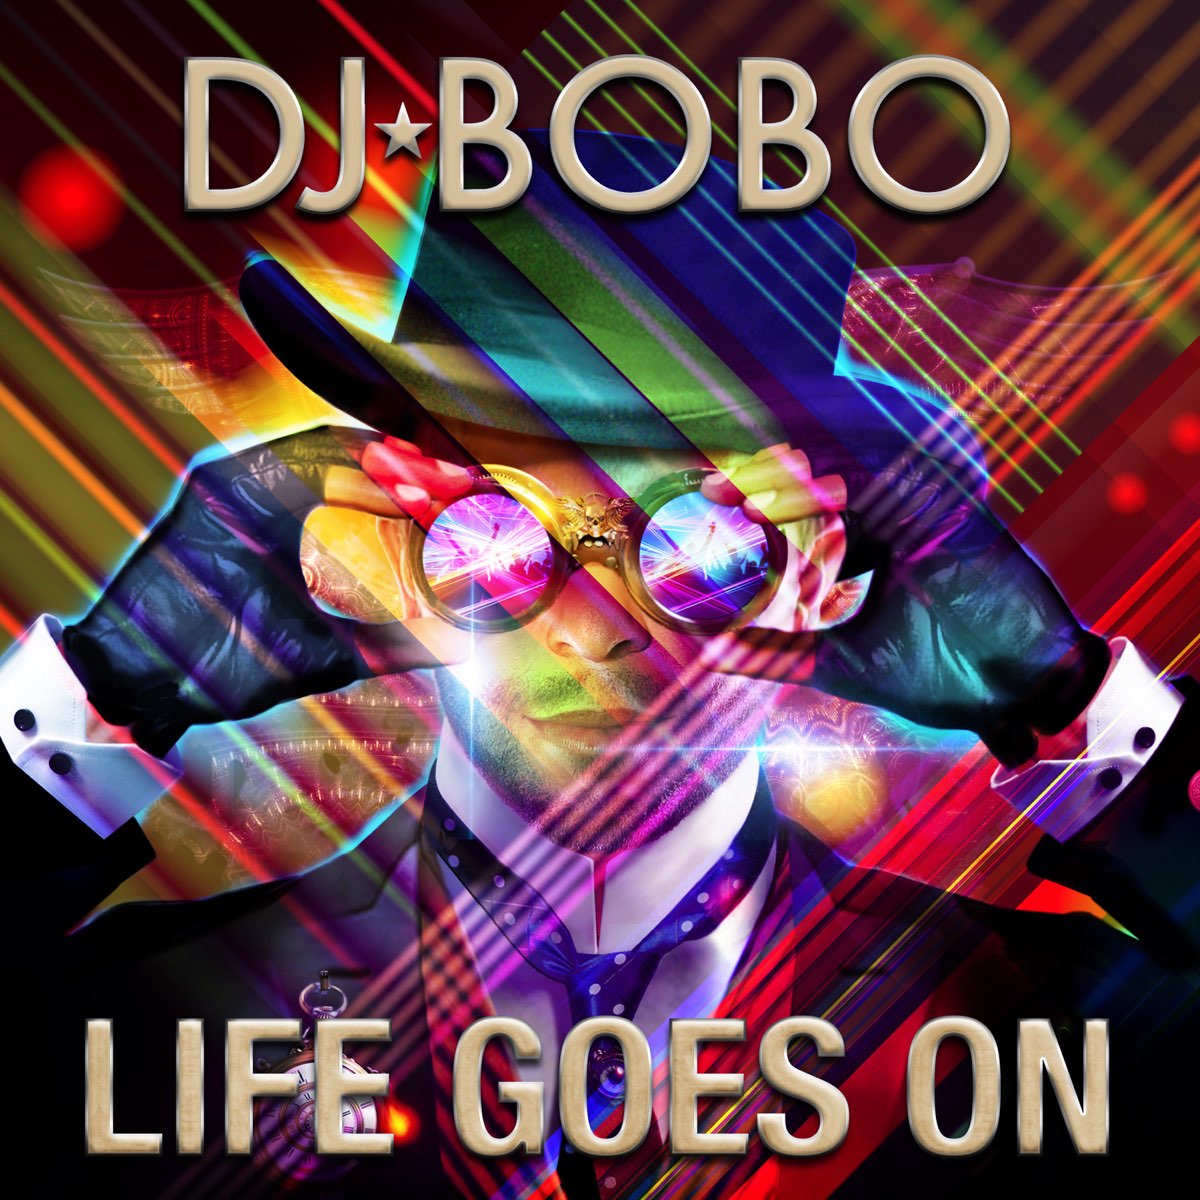 DJ Bobo. DJ Bobo обложка. DJ Bobo рисунок. Обложка песни Life goes on. Бобо песенки